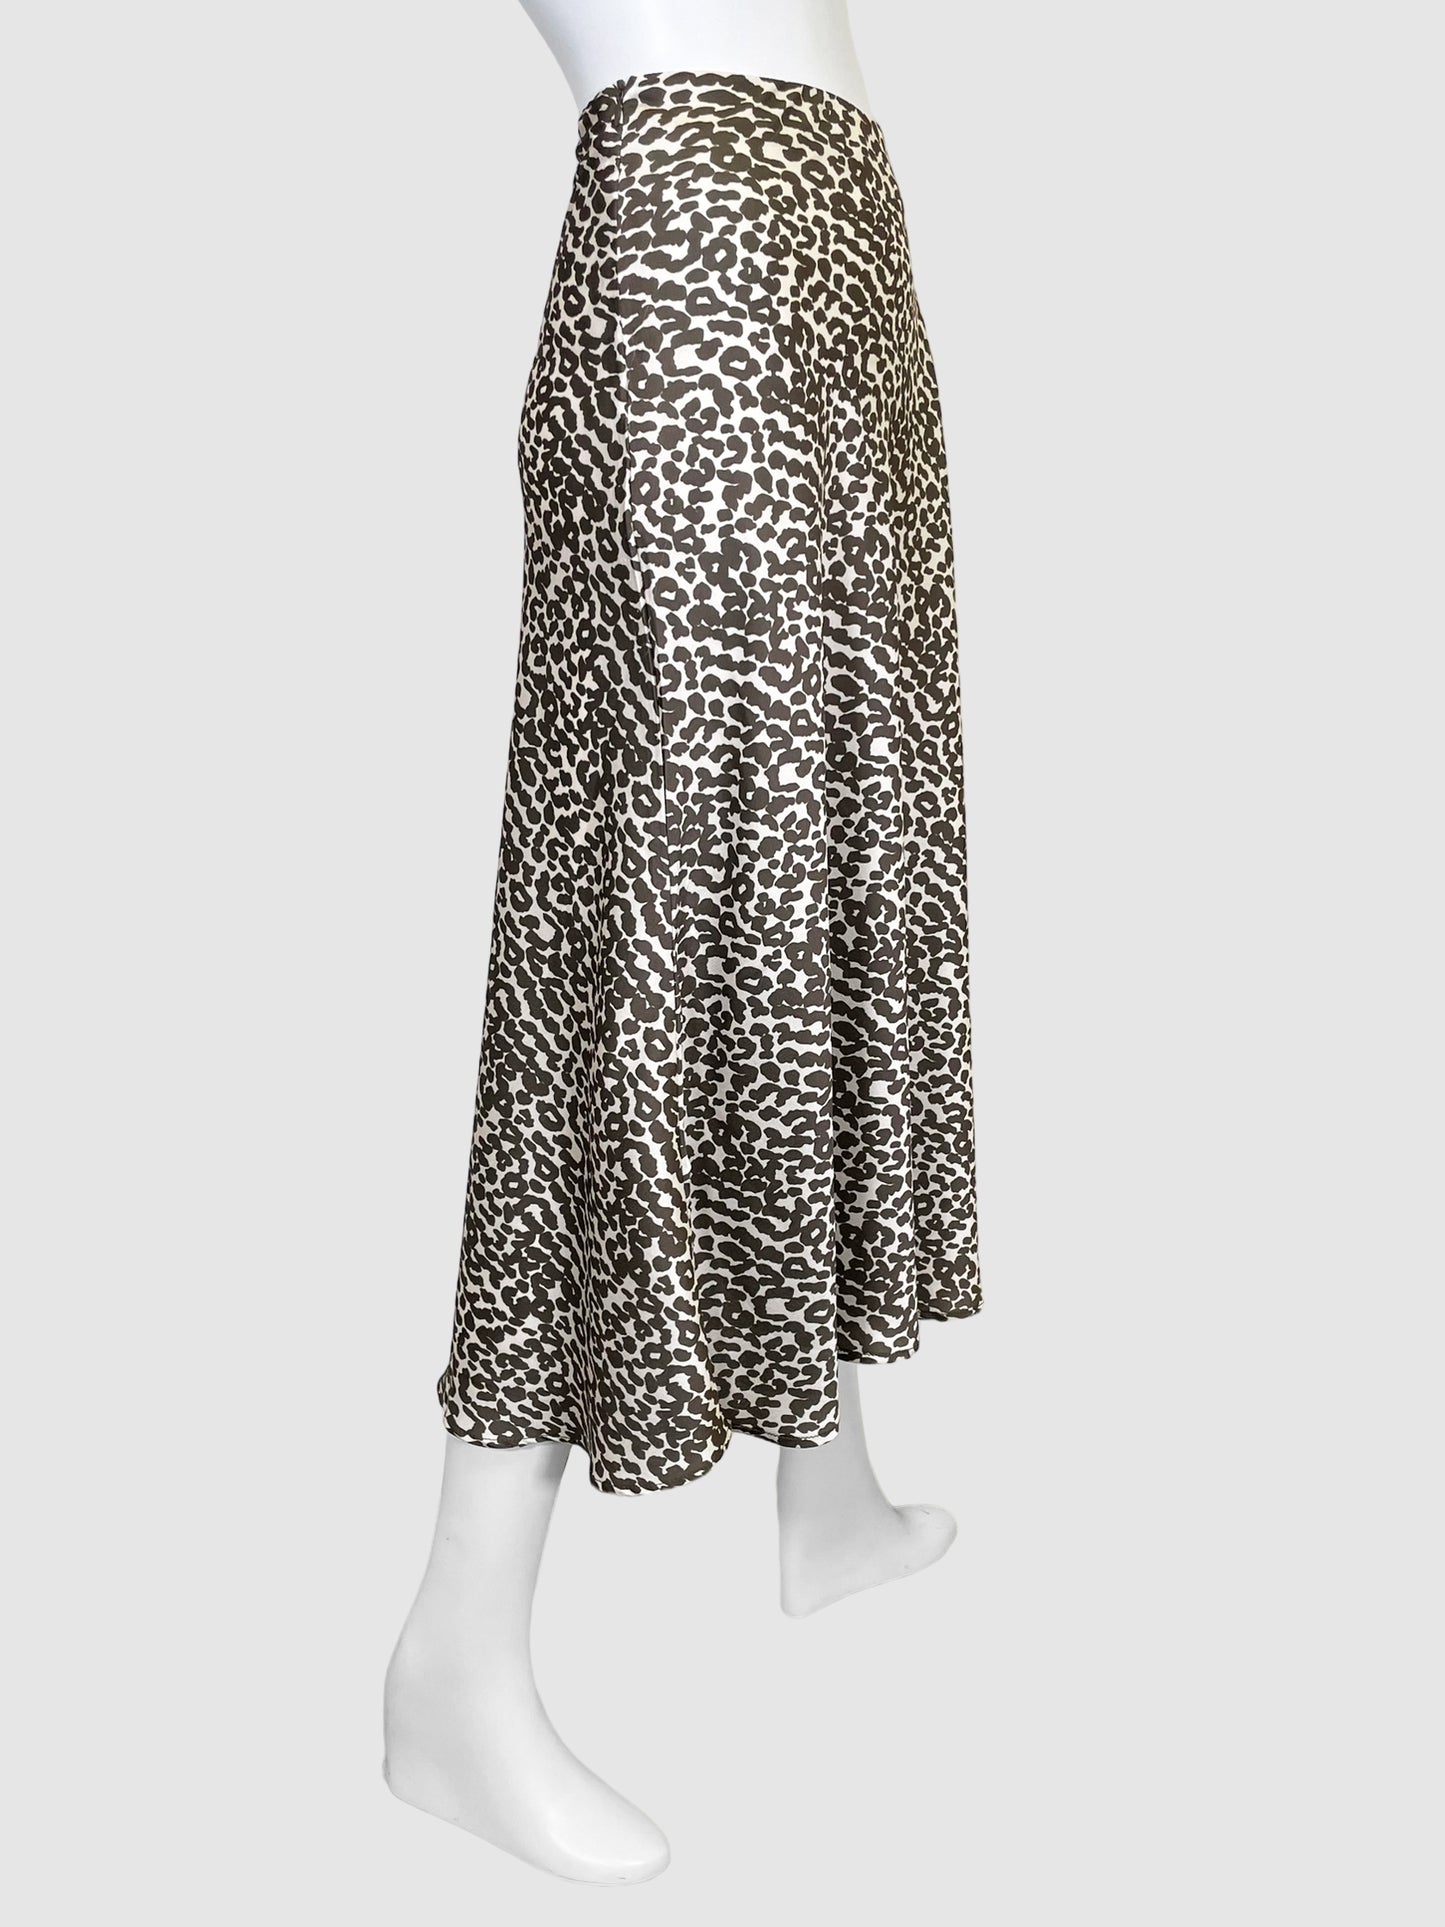 Apparis Animal Print Silky Skirt - Size XL